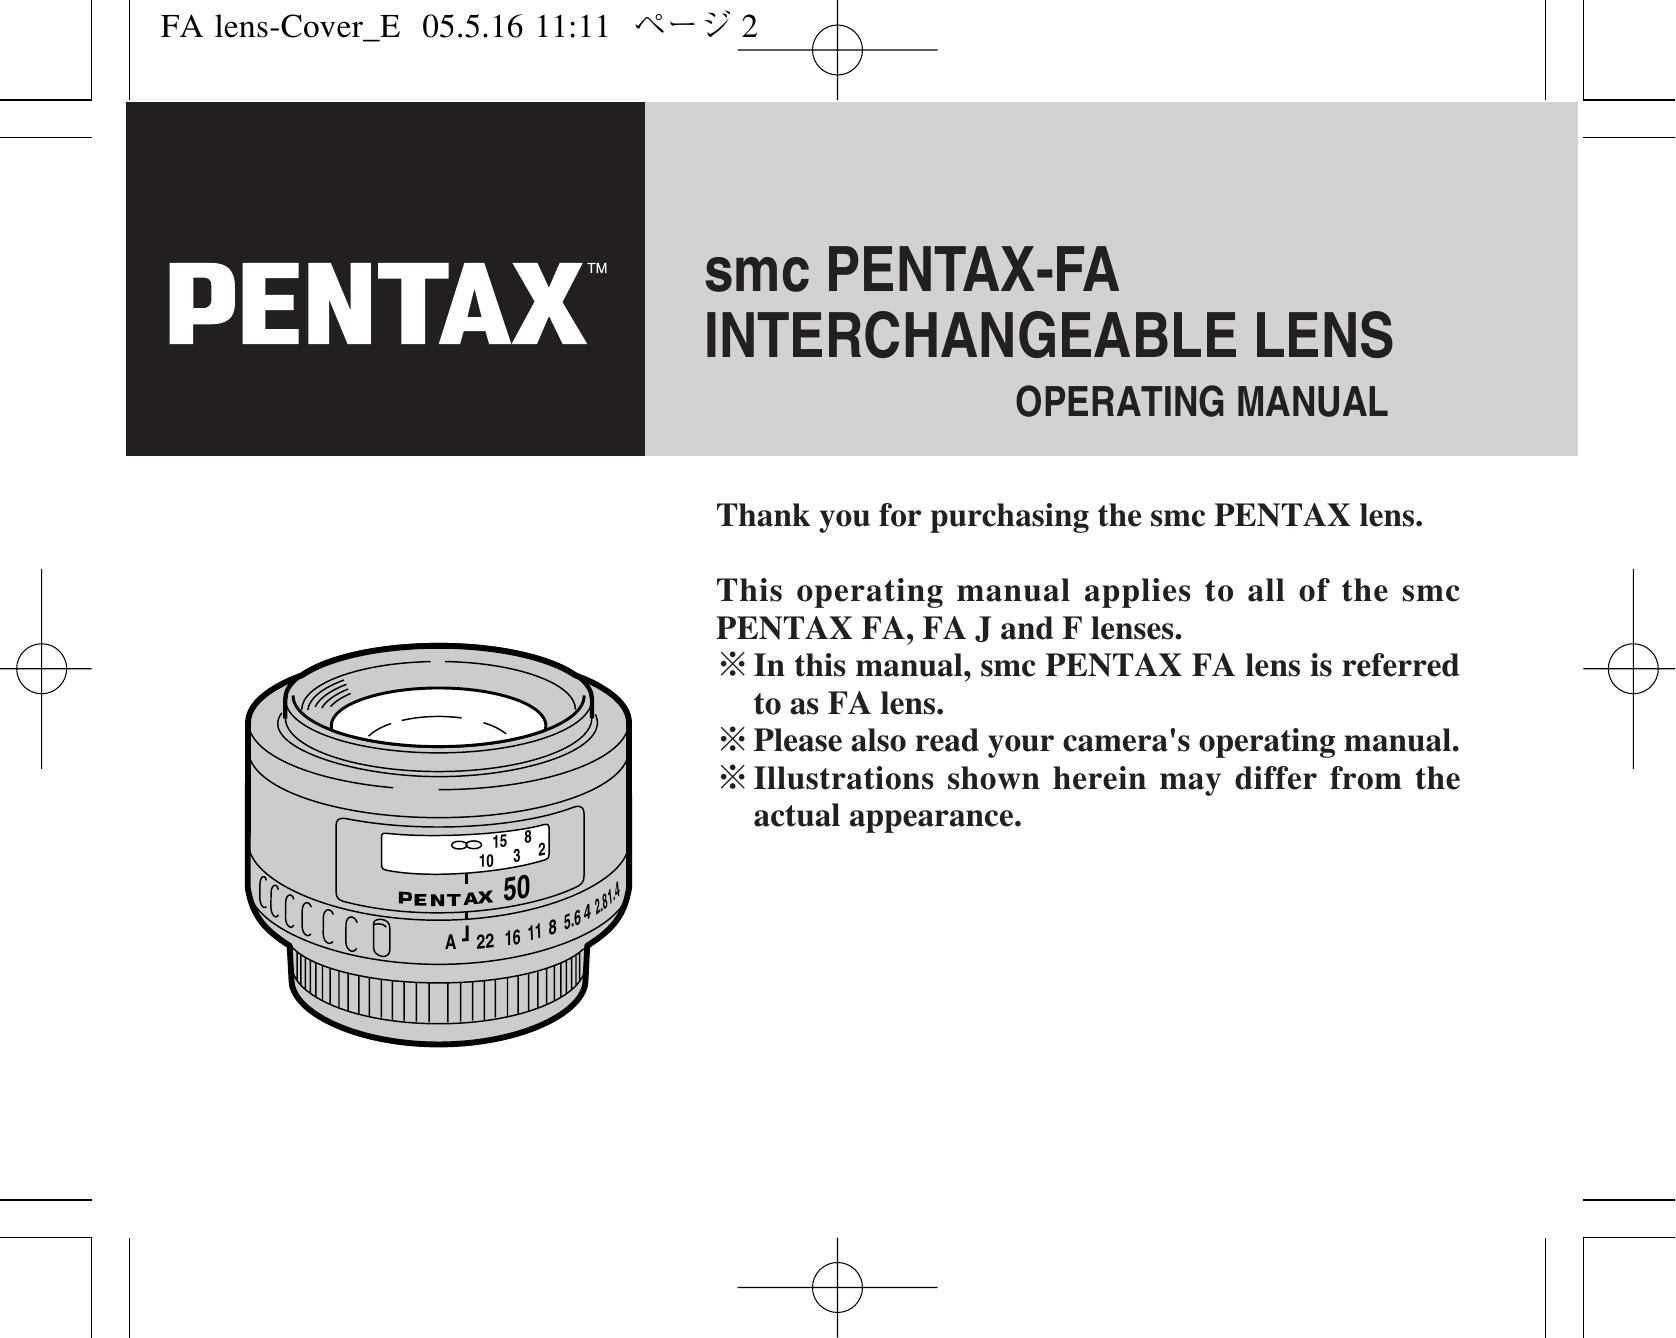 Pentax INTERCHANGEABLE LENS Camera Lens User Manual